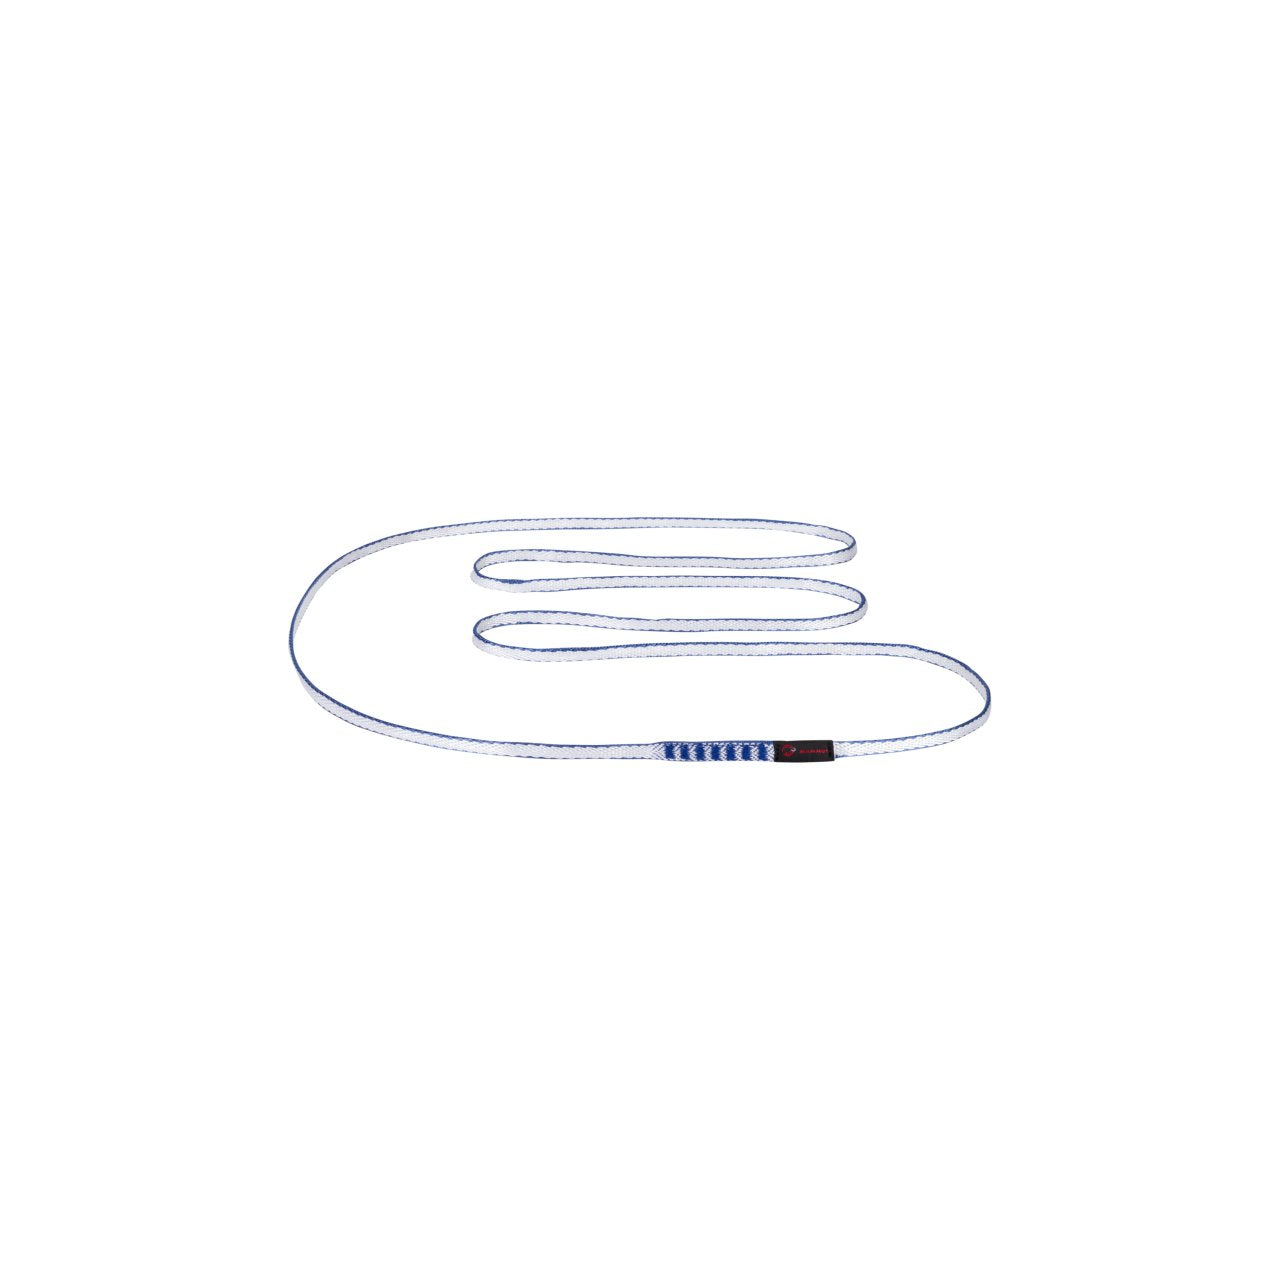 Contact Sling 8.0 (120cm) - bleu, anneau cousu